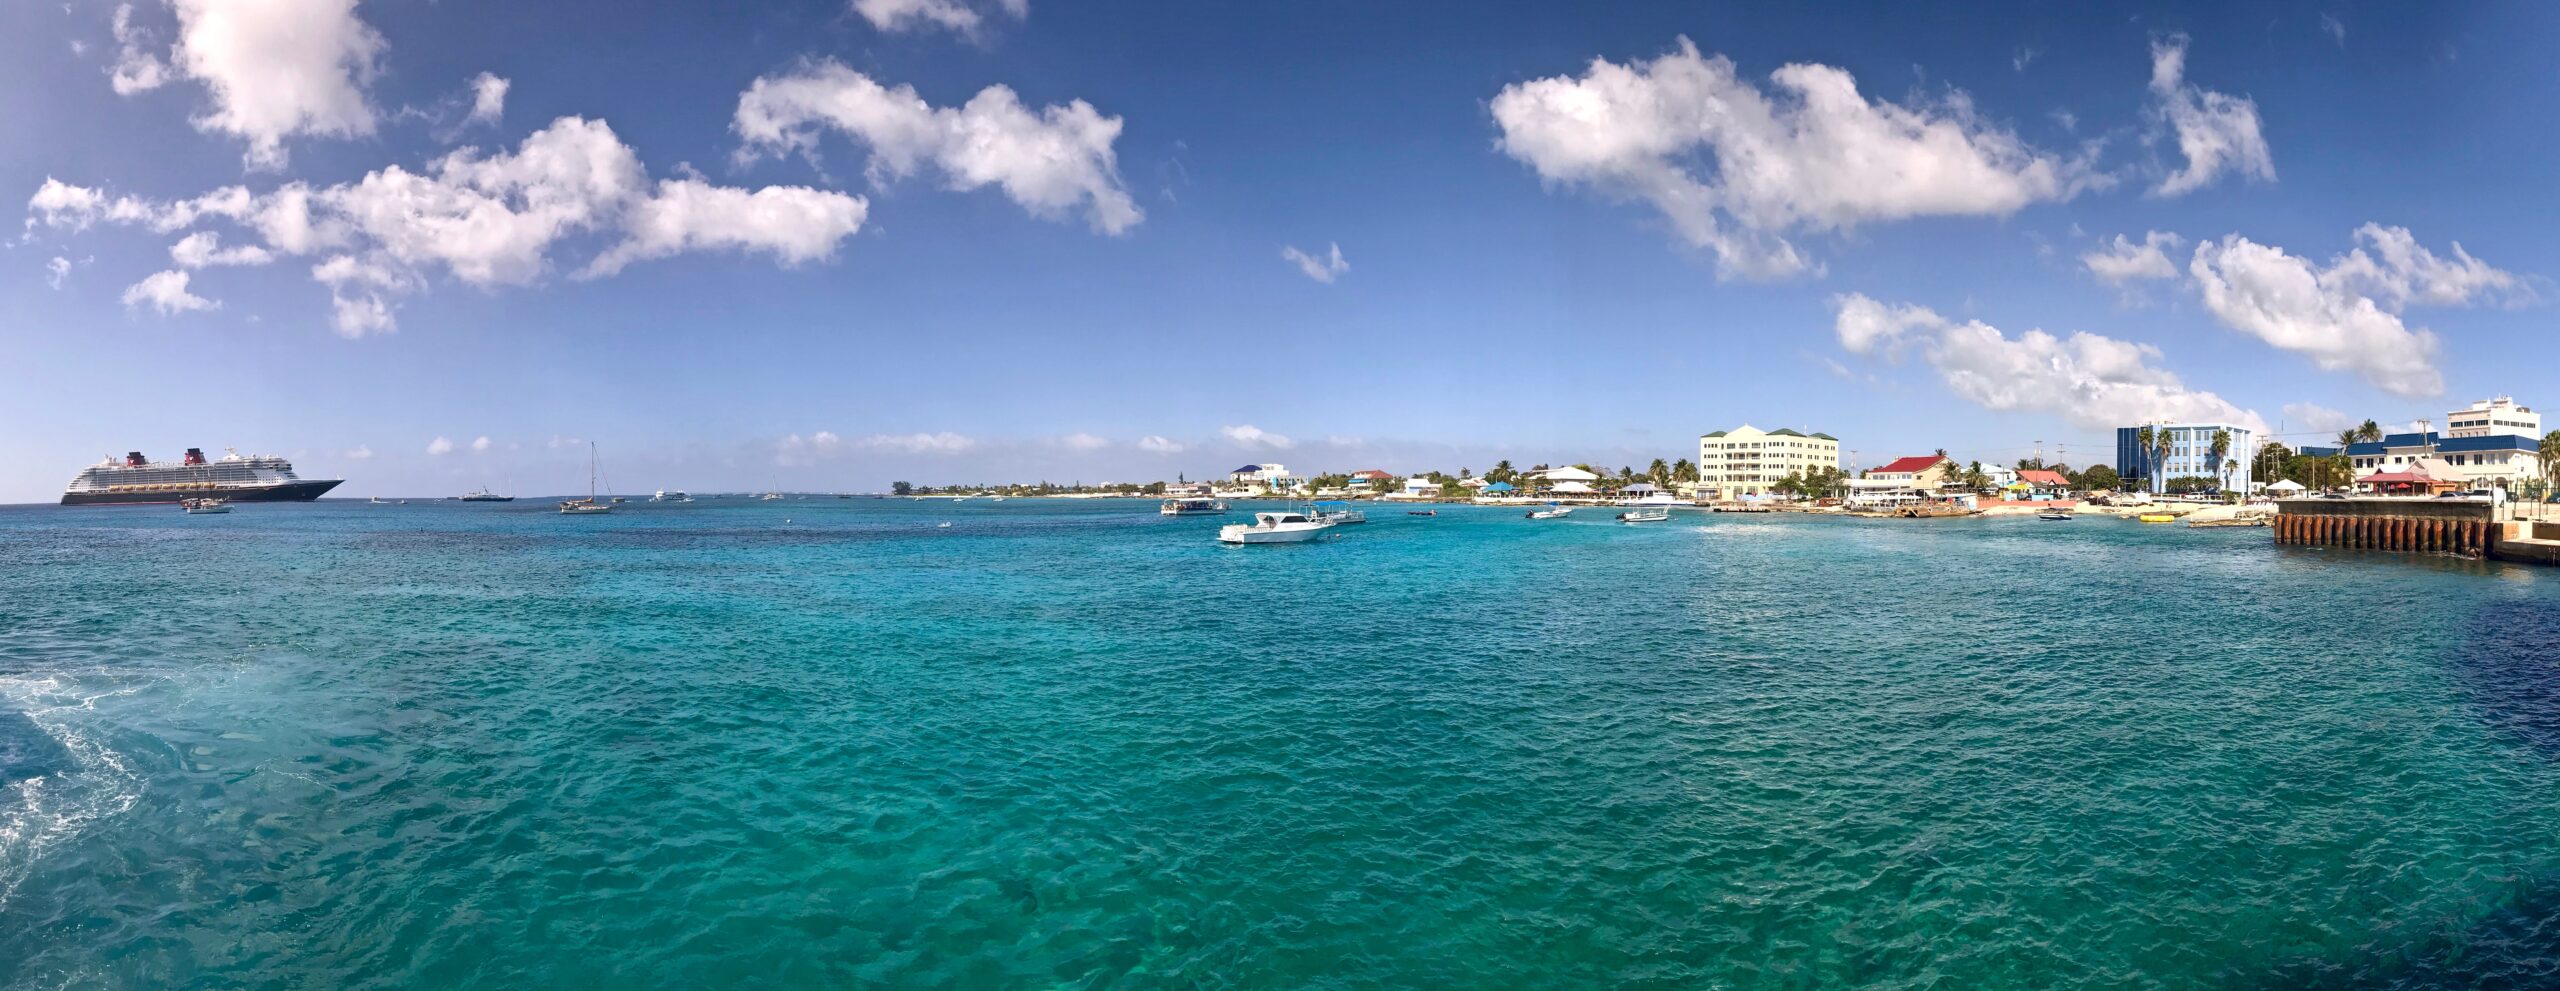 Royal Watler Cruise Terminal, George Town, Cayman Islands